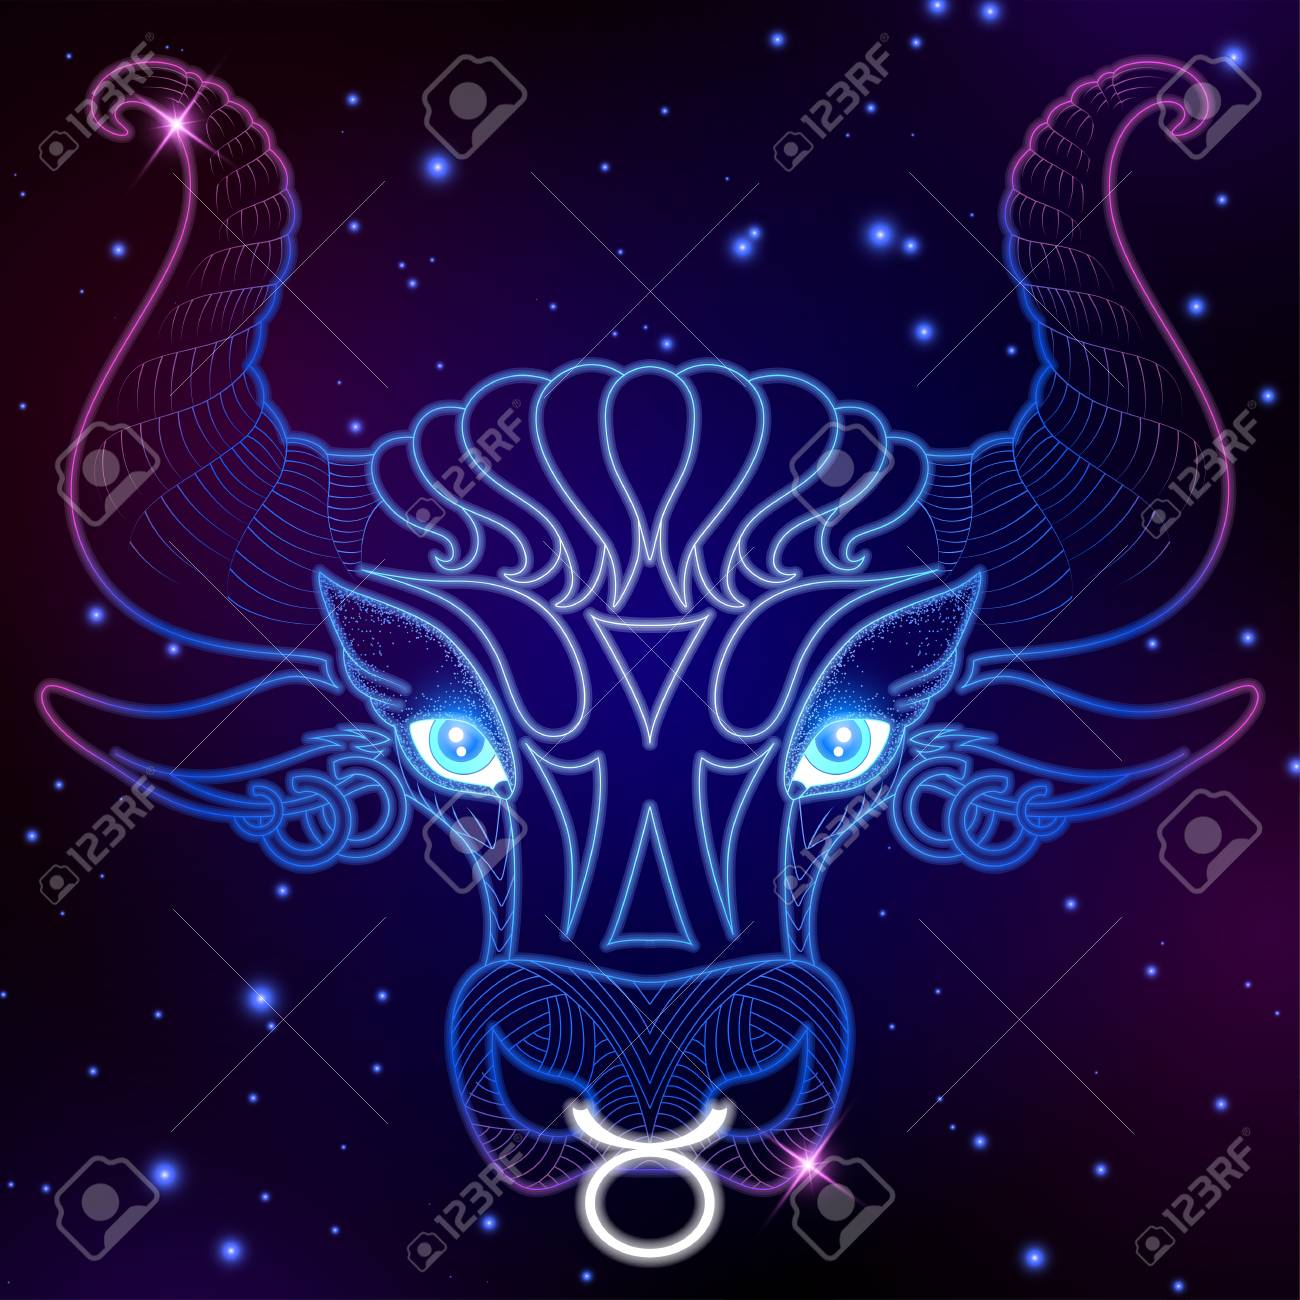 Why Taurus is best zodiac trait?